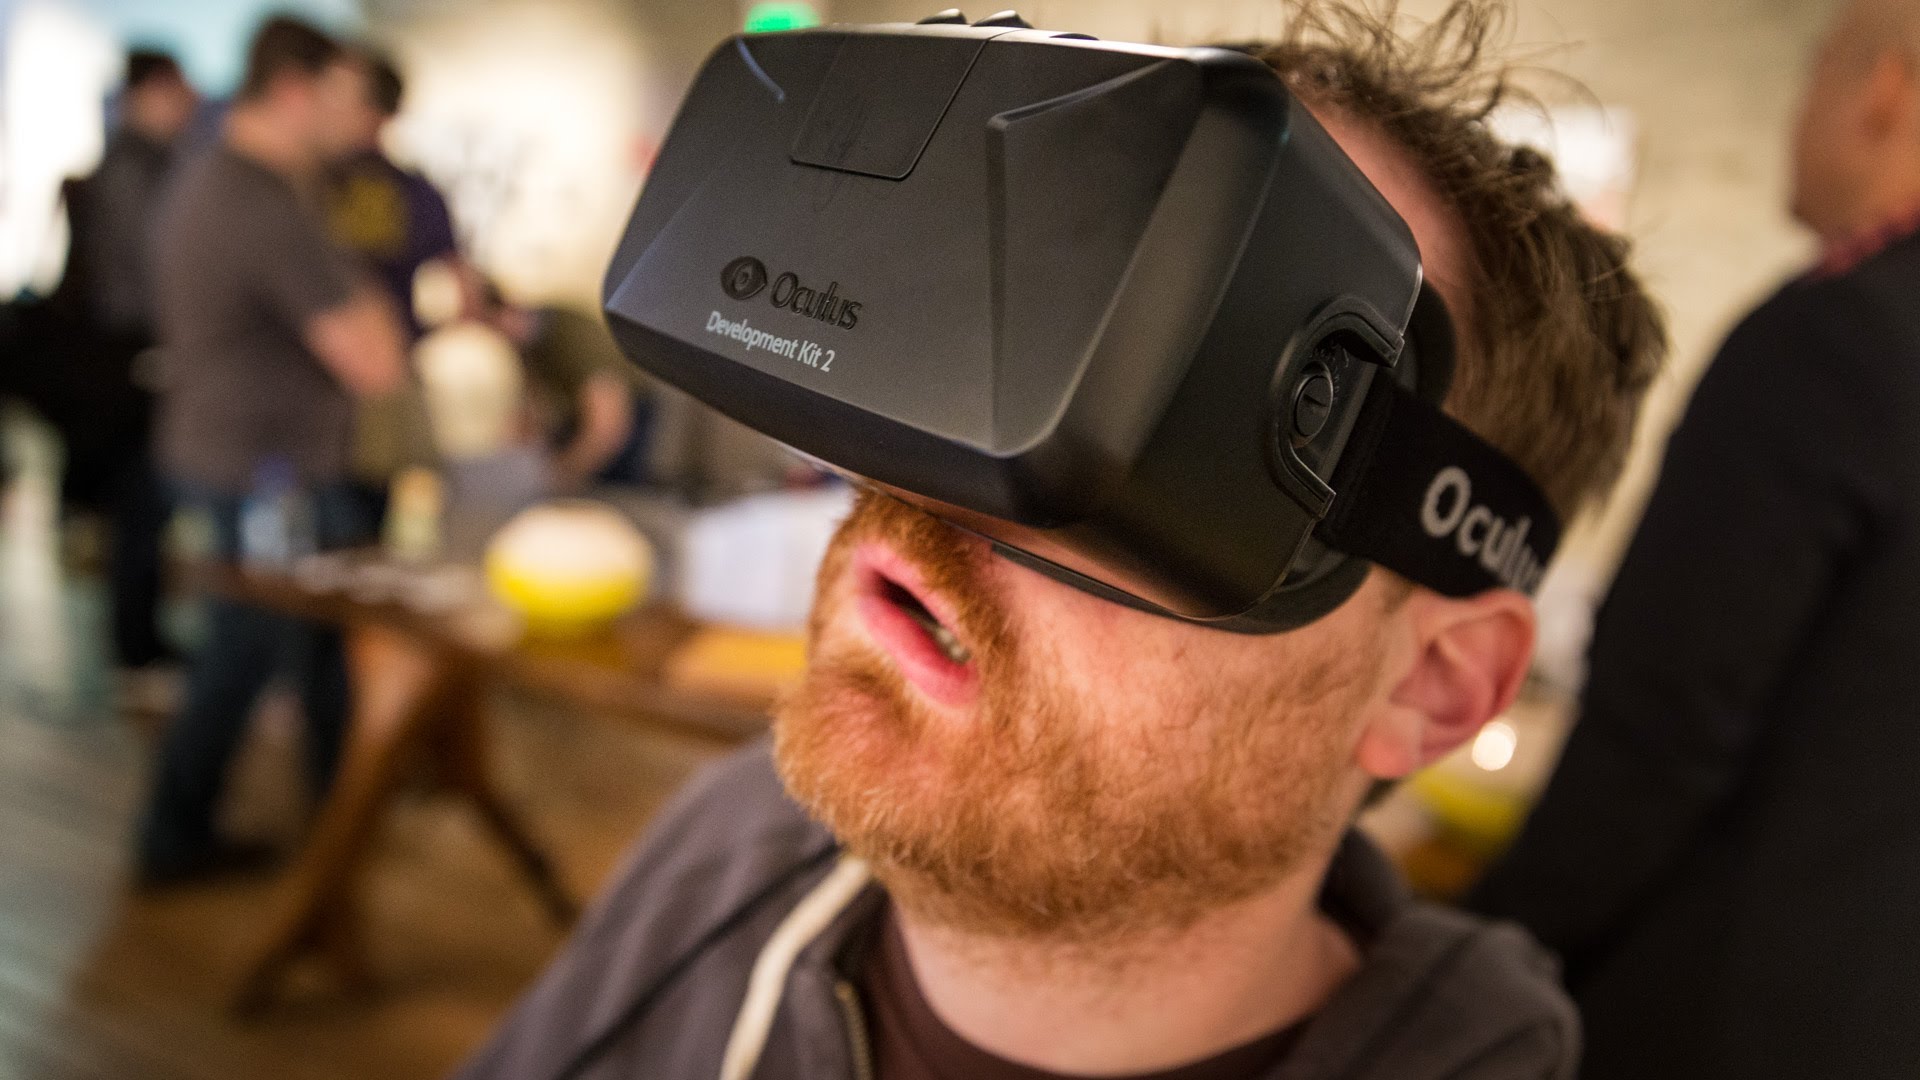 Oculus Development Kit 2